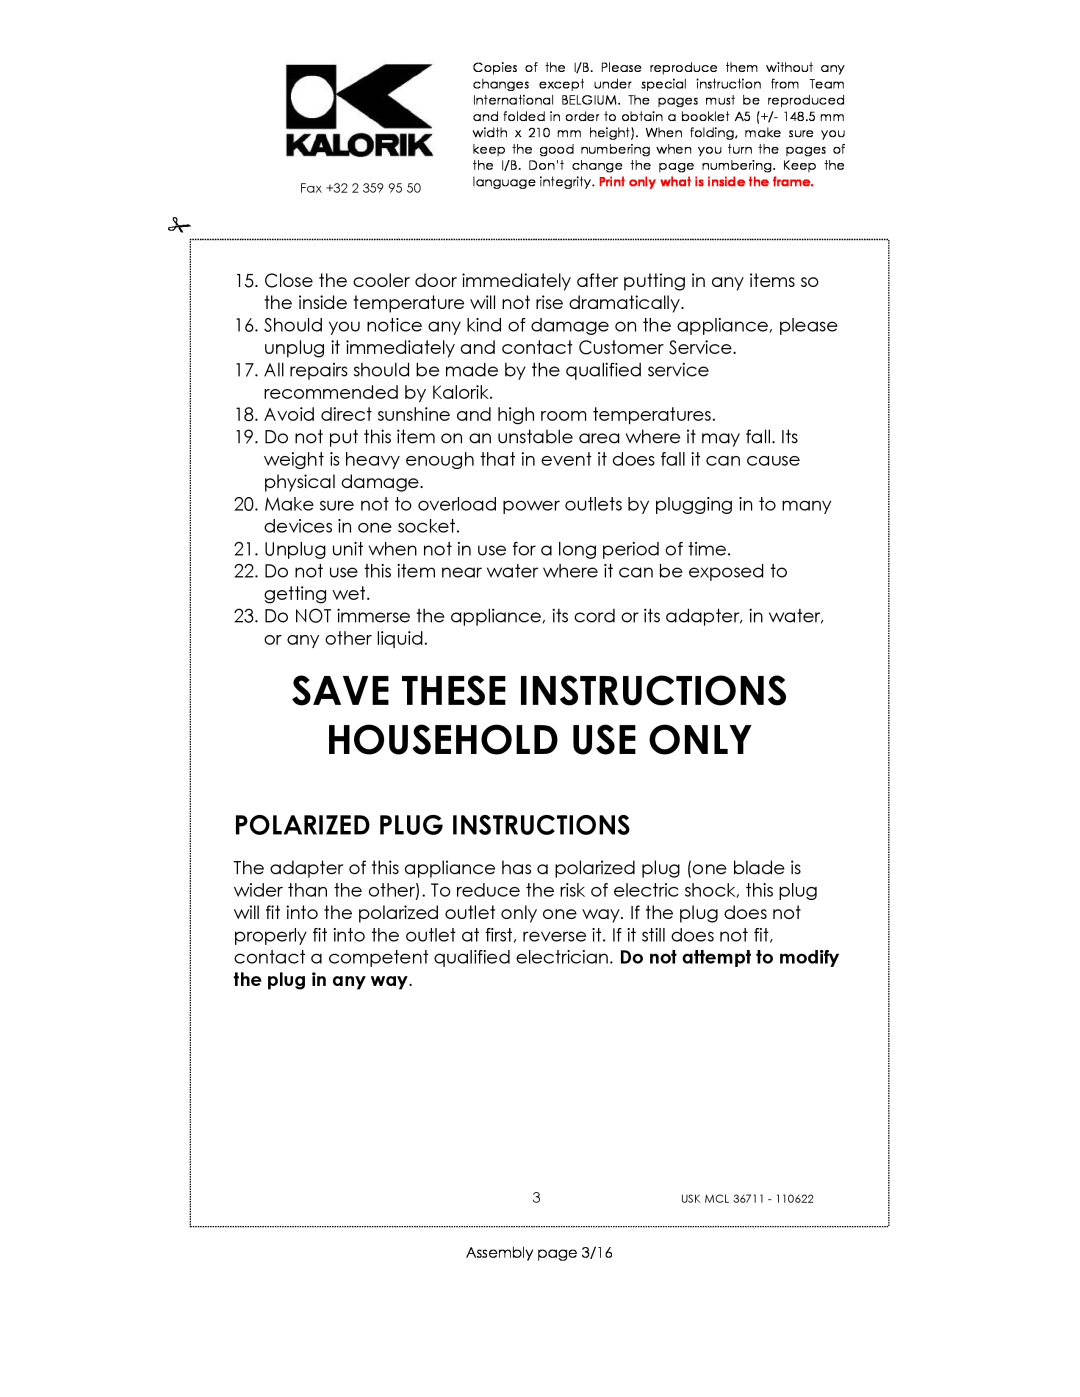 Kalorik USK MCL 36711 manual Save These Instructions Household Use Only, Polarized Plug Instructions 